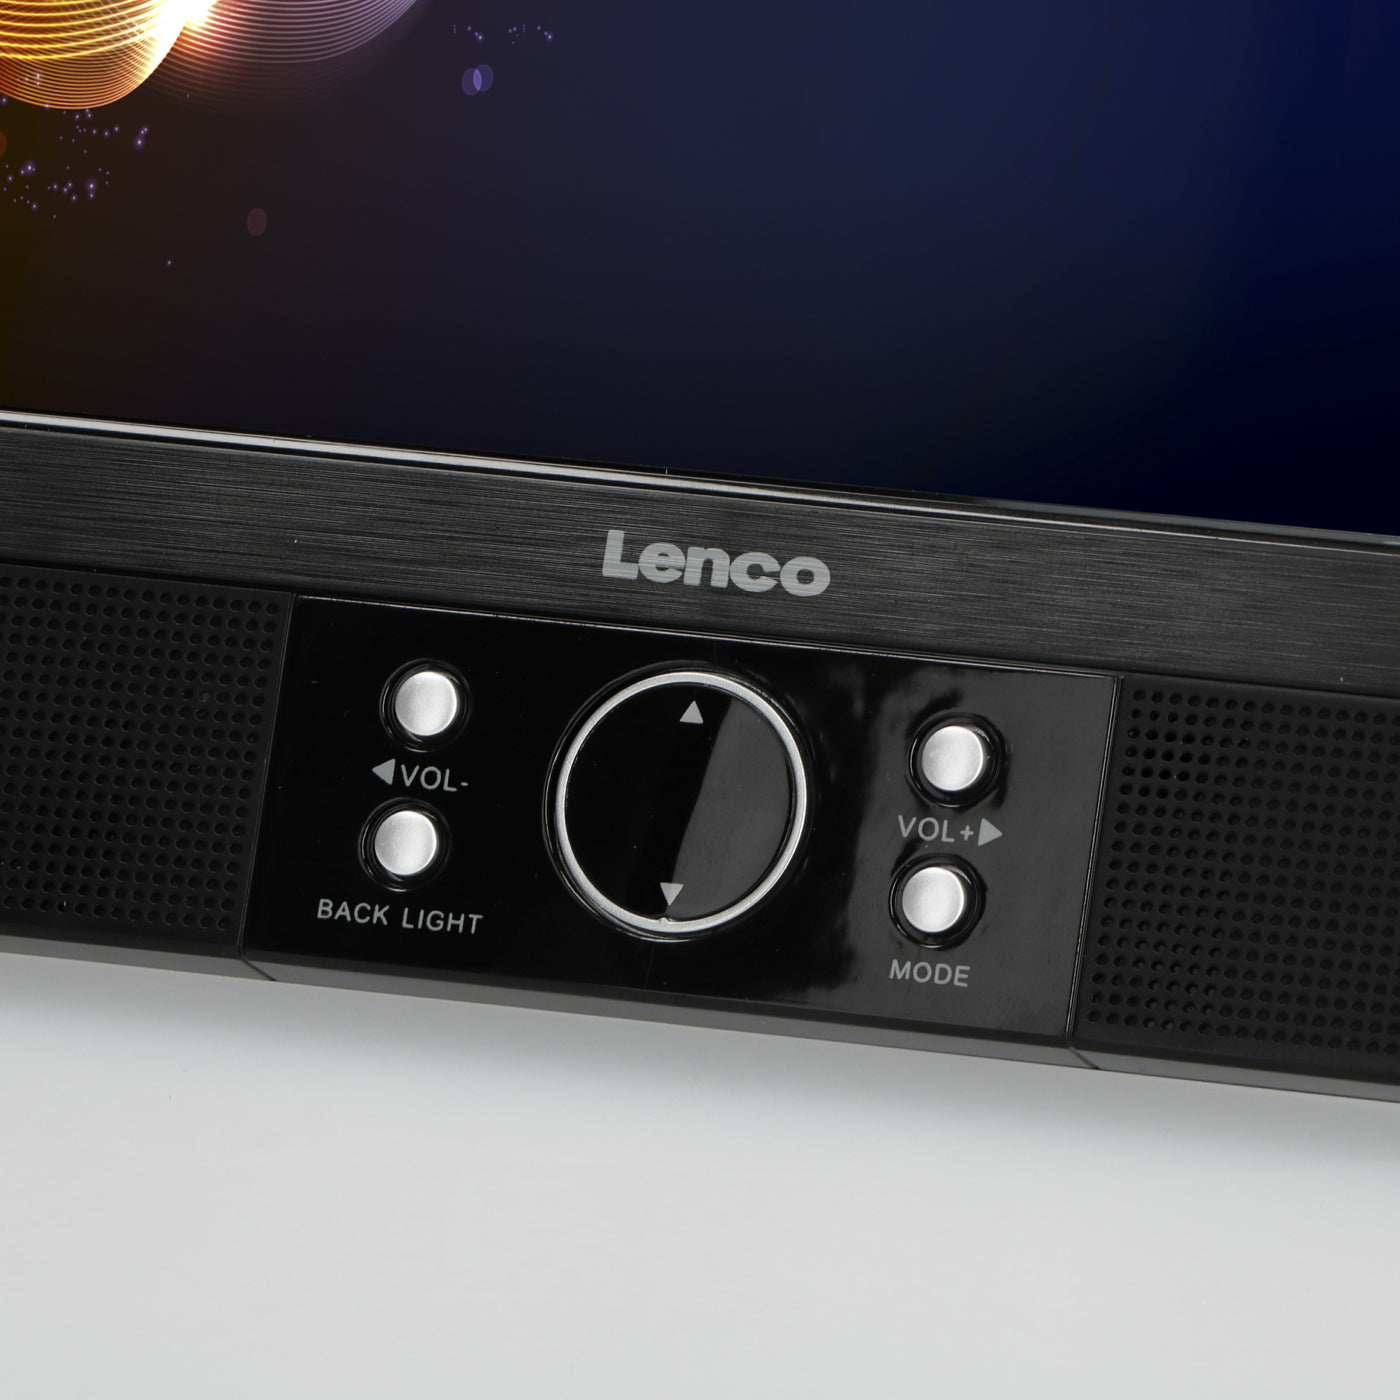 LENCO MES-405 - 9" Dual screen portable DVD player with USB - Black